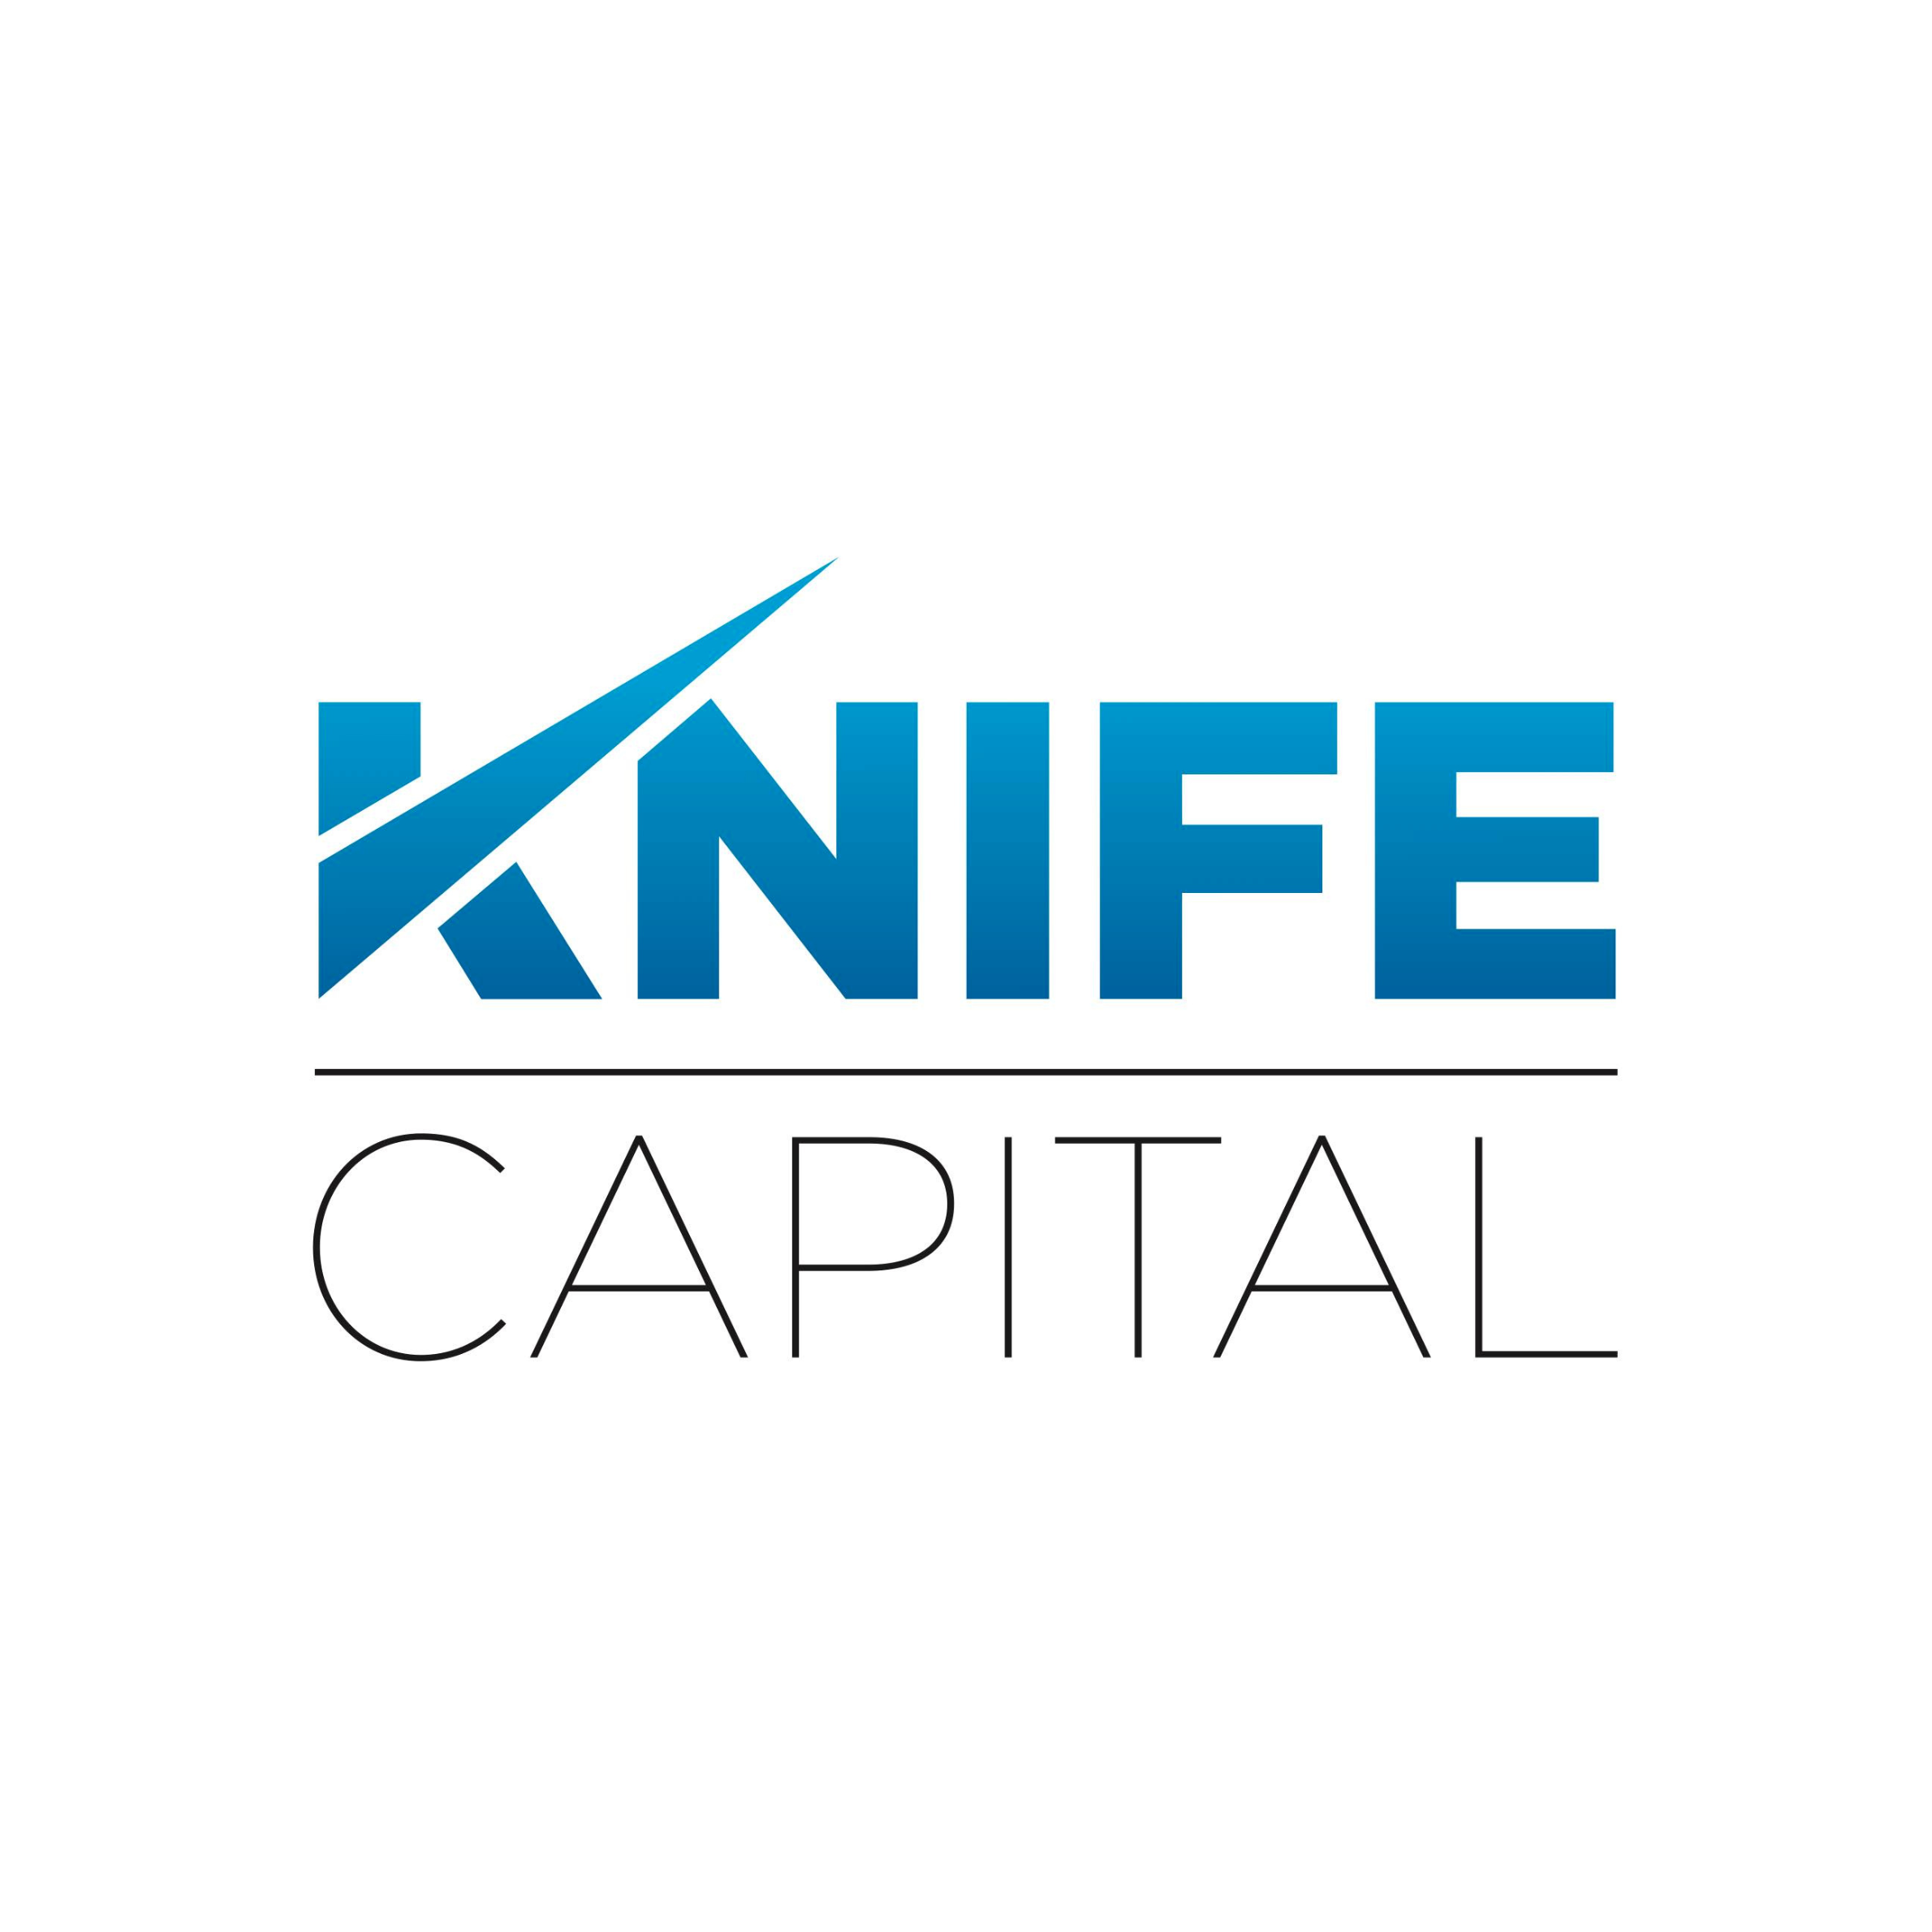 Knife Capital